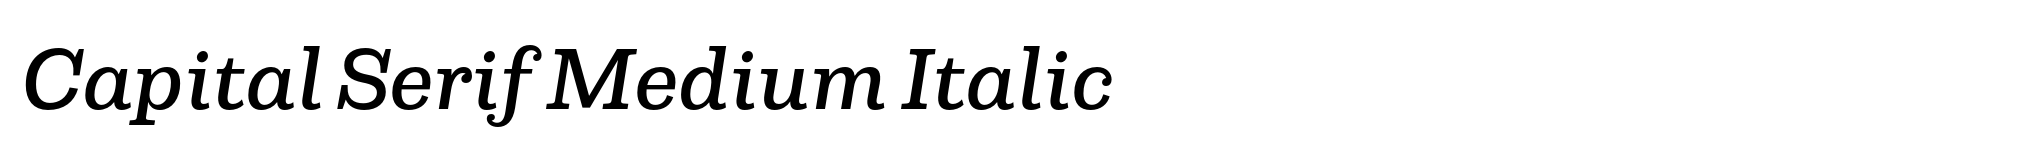 Capital Serif Medium Italic image